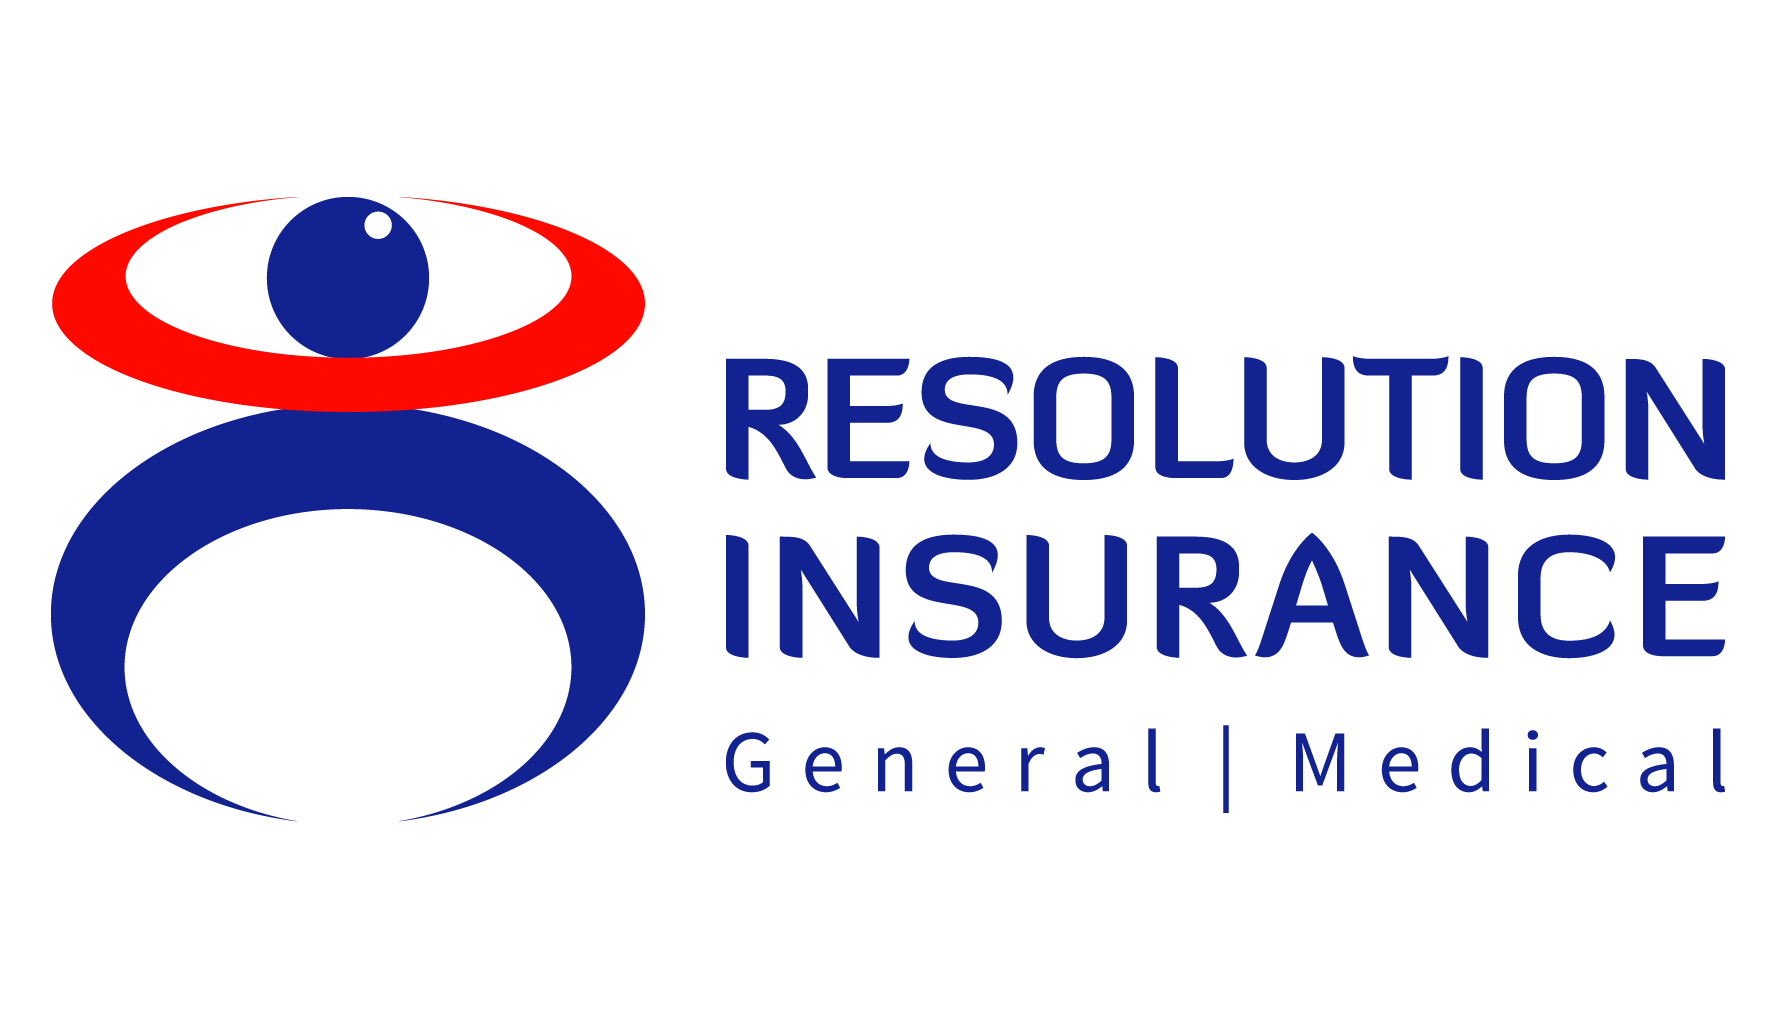 Resolution Insurance